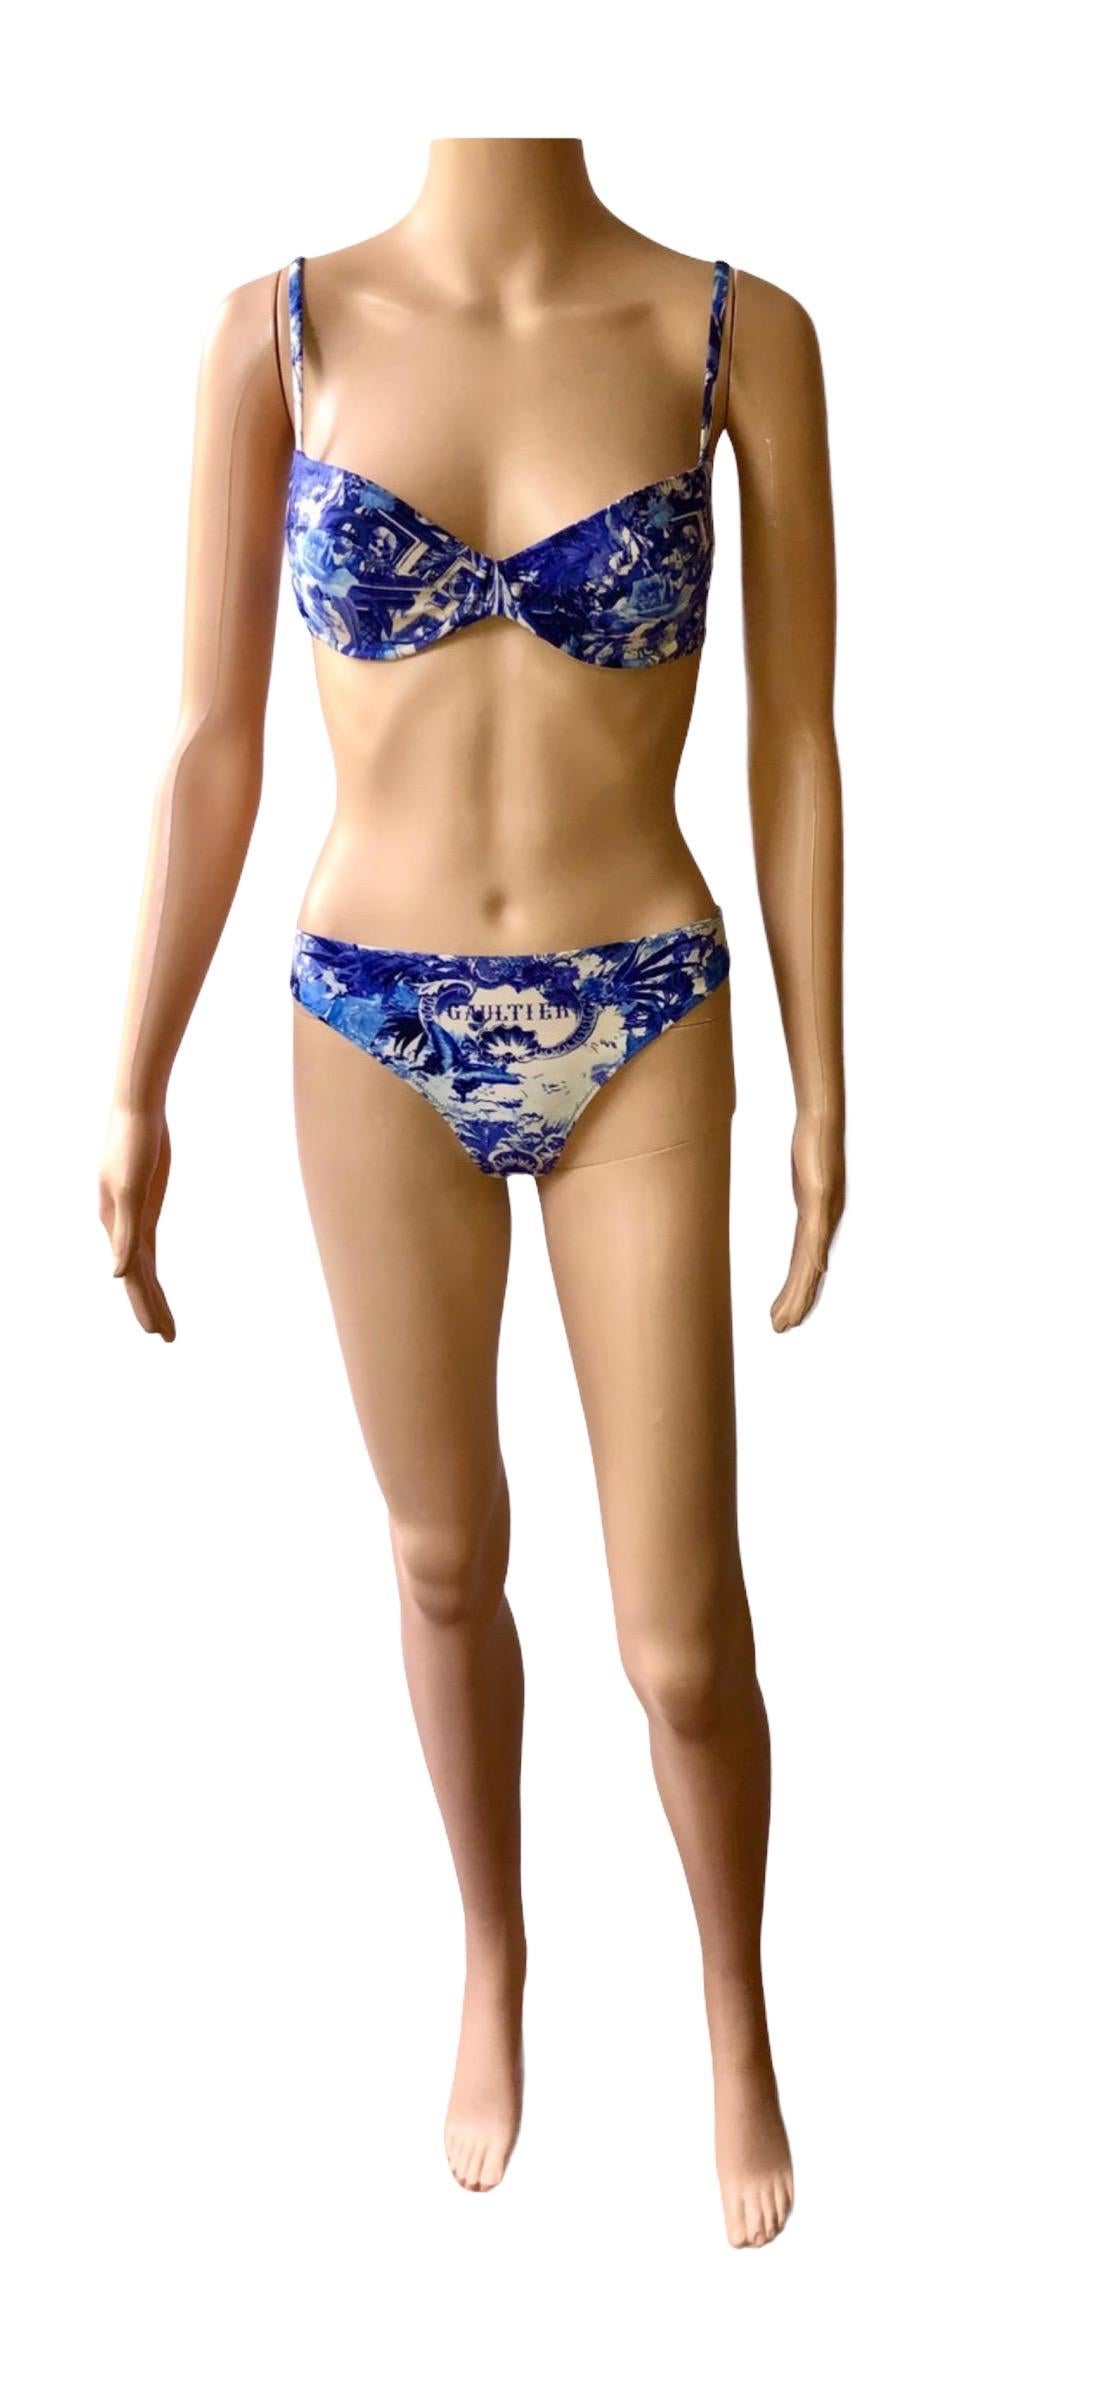 Jean Paul Gaultier Soleil S/S 1999 Flamingo Tropical Bikini Swimsuit 2 Piece Set For Sale 6